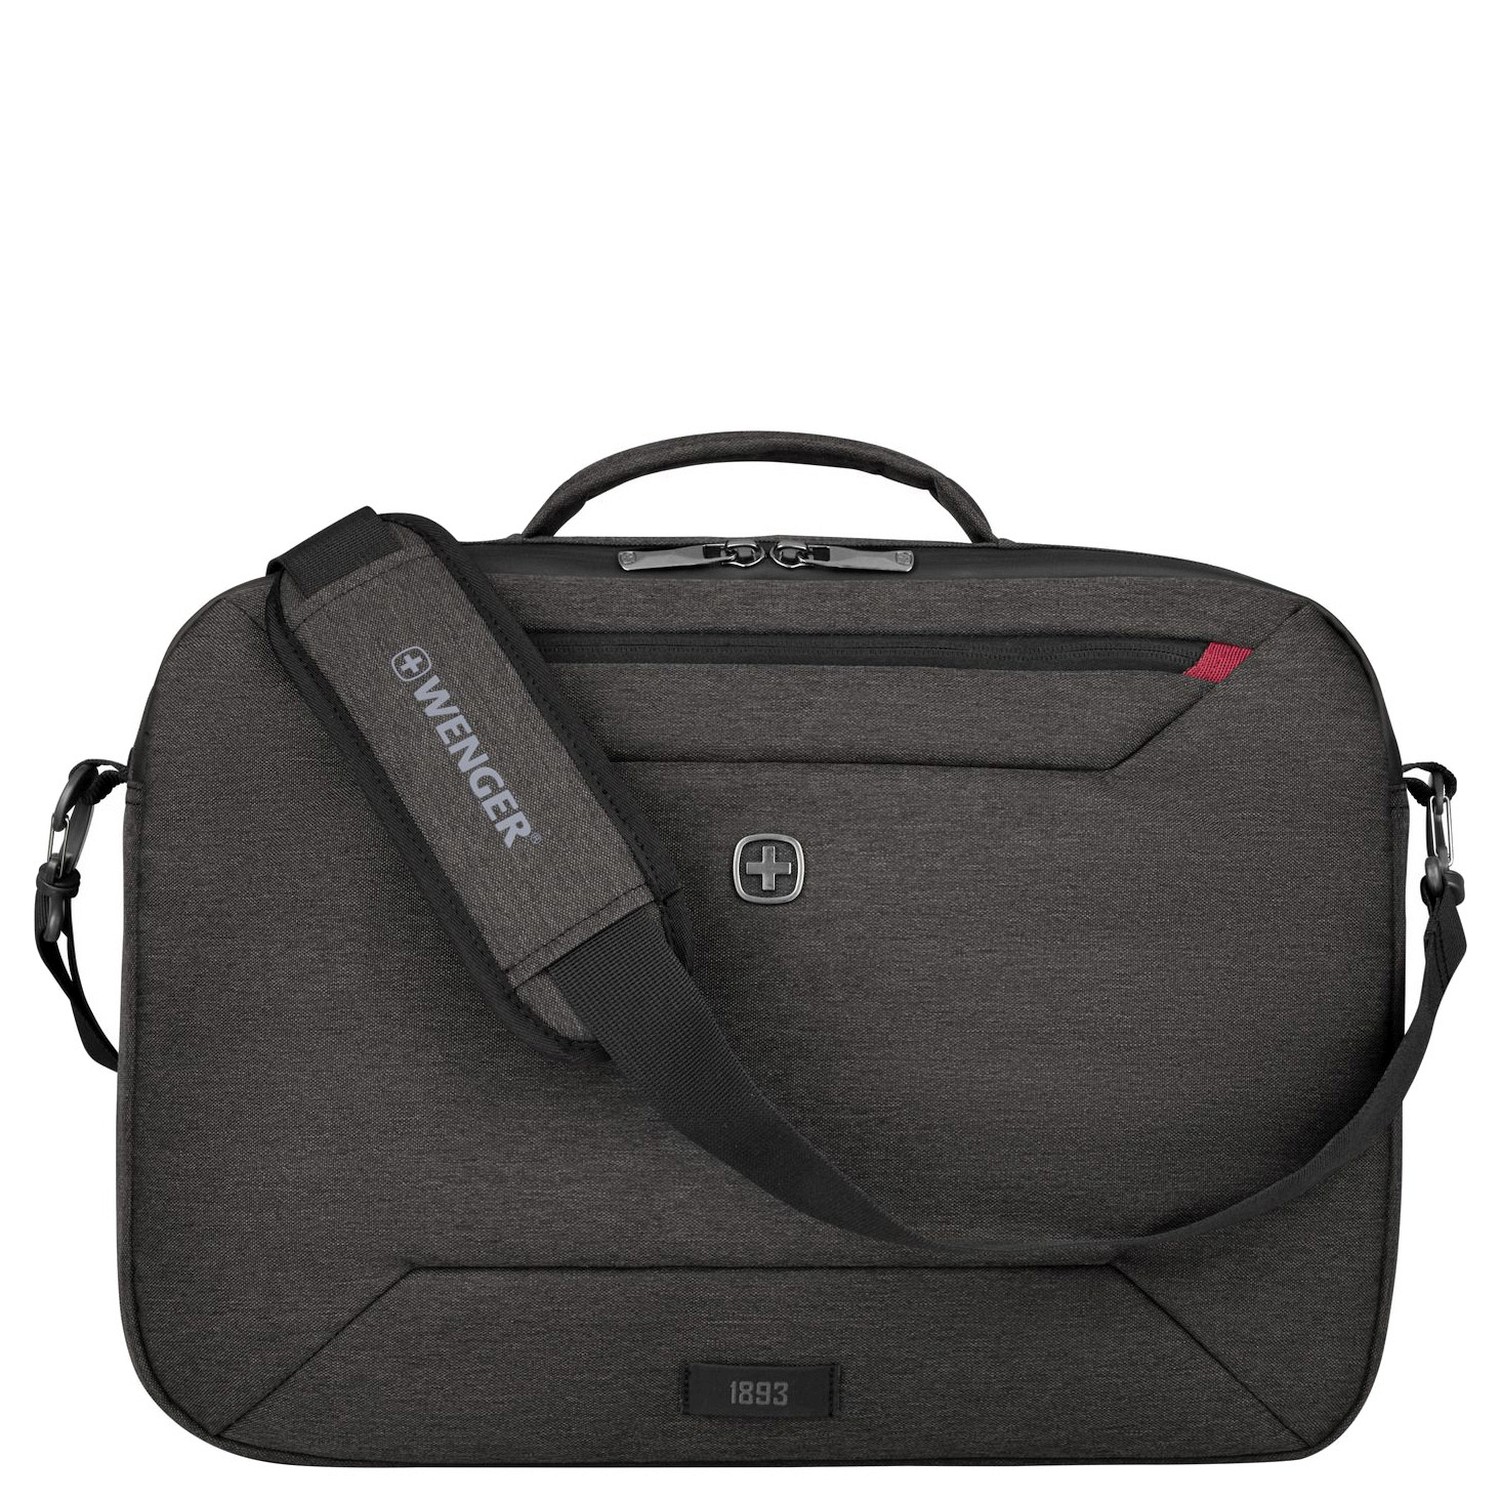 Сумка для ноутбука Wenger MX Commute 16 44 cm, цвет heather grey рюкзак wenger mx reload 14 42 cm laptopfach цвет heather grey